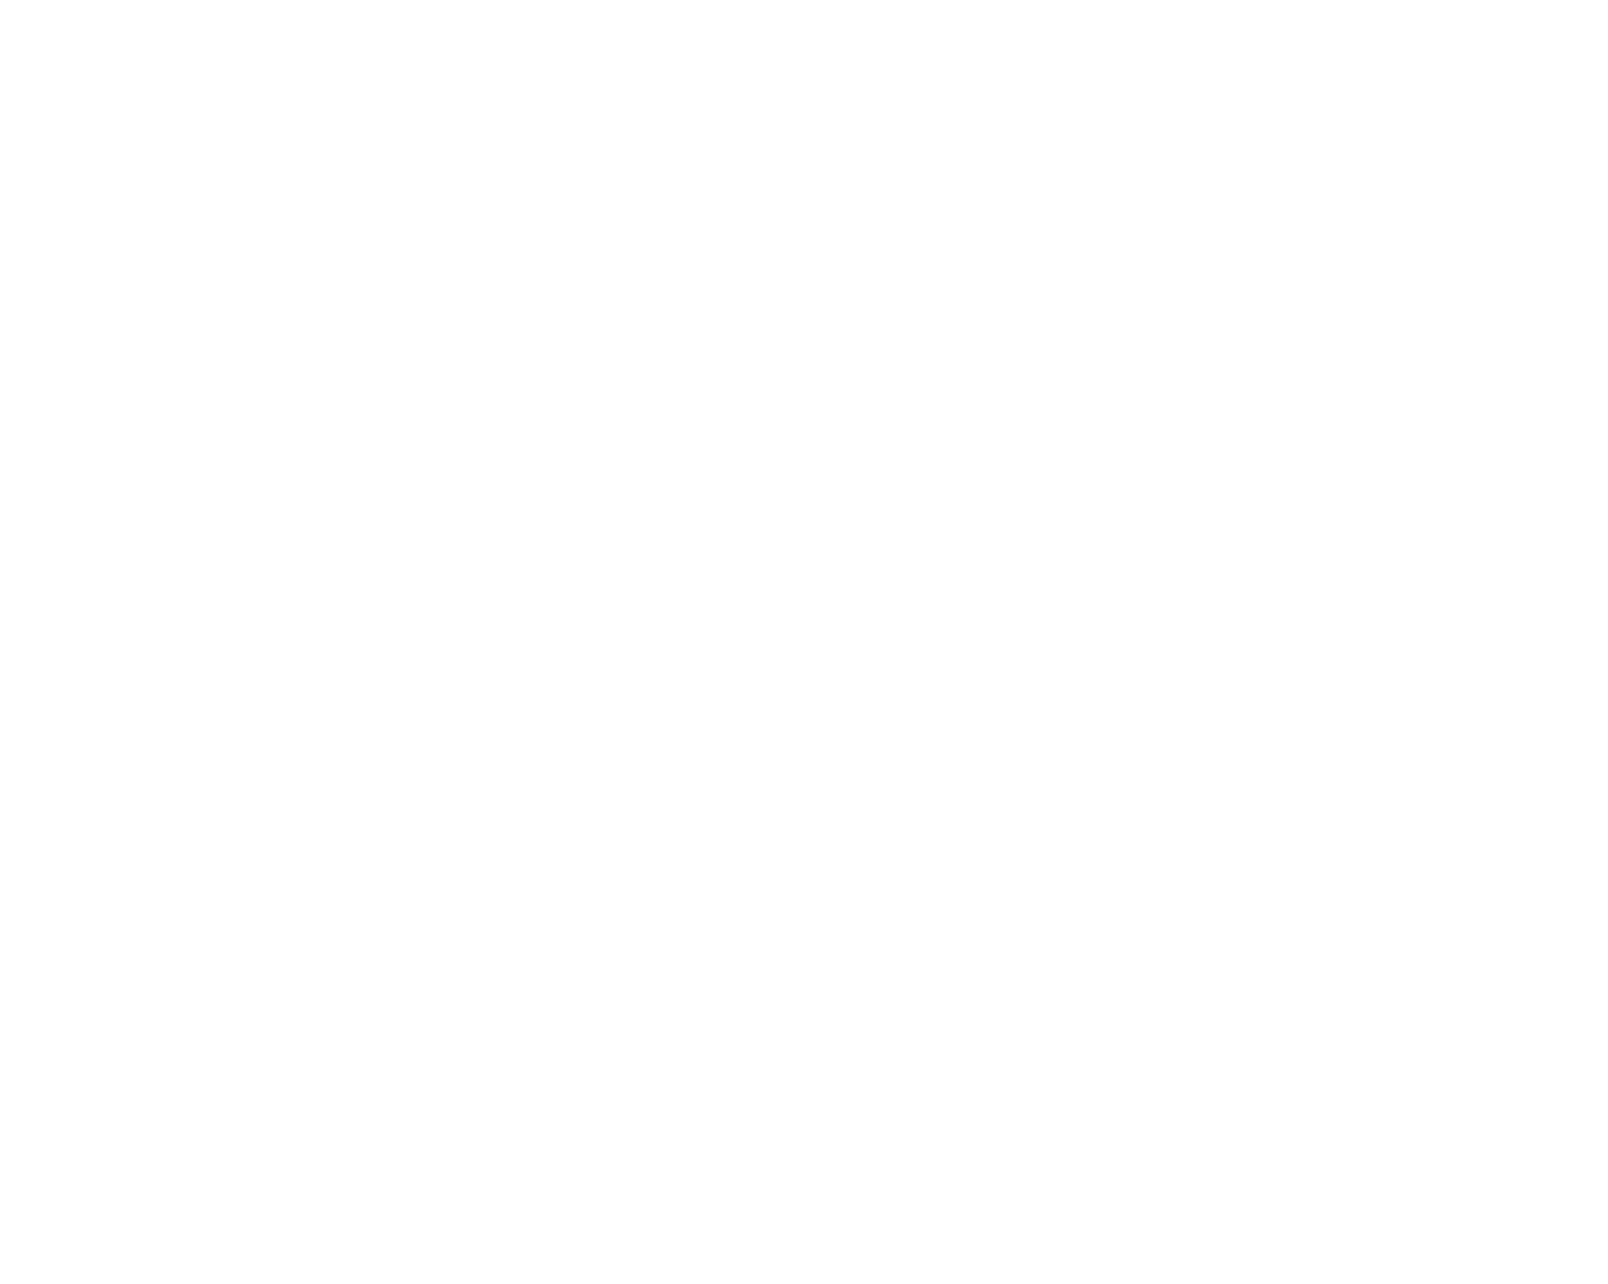 Jungle Junction logo